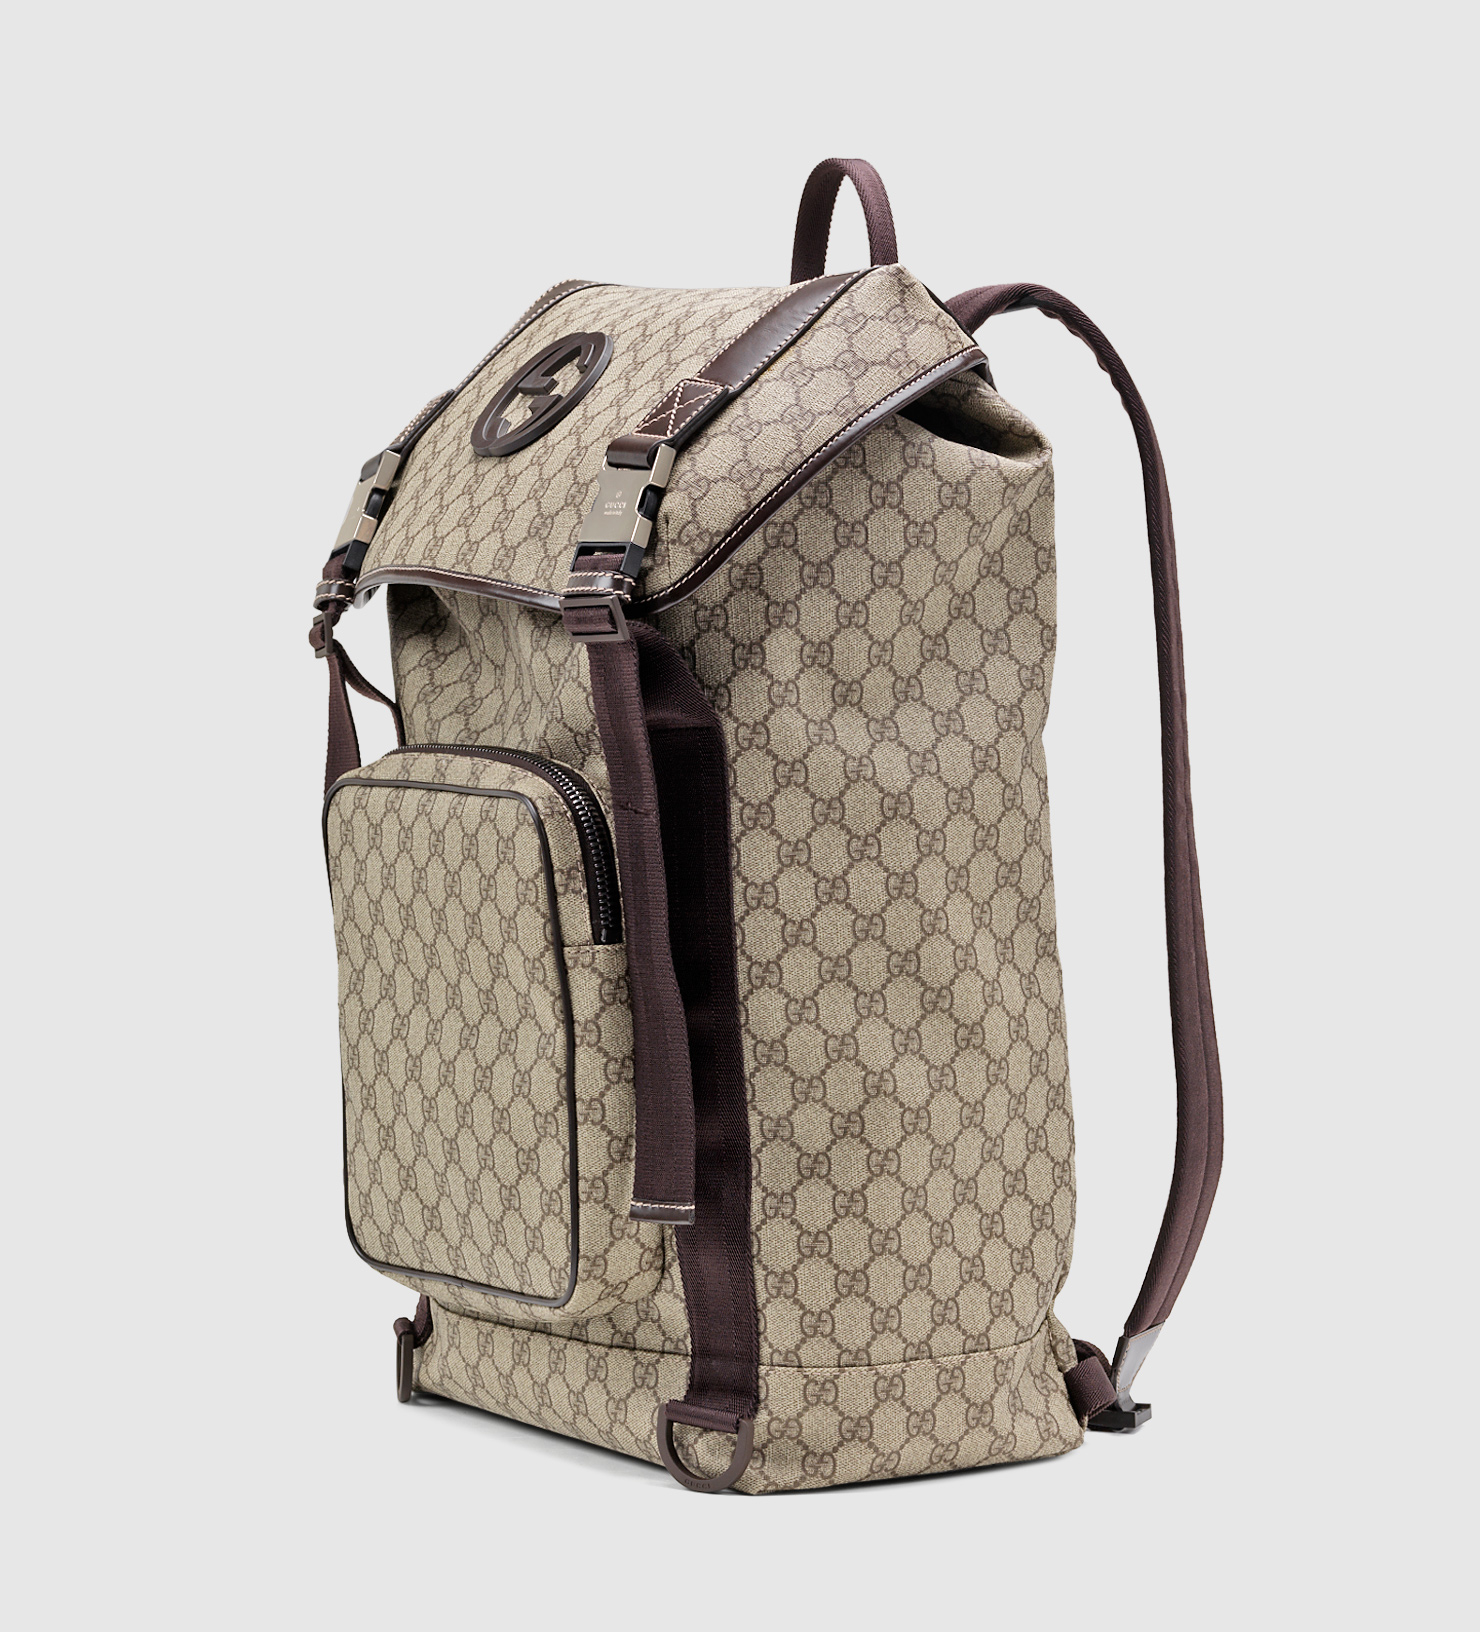 Gucci Gg Supreme Canvas Interlocking G Backpack in Natural for Men